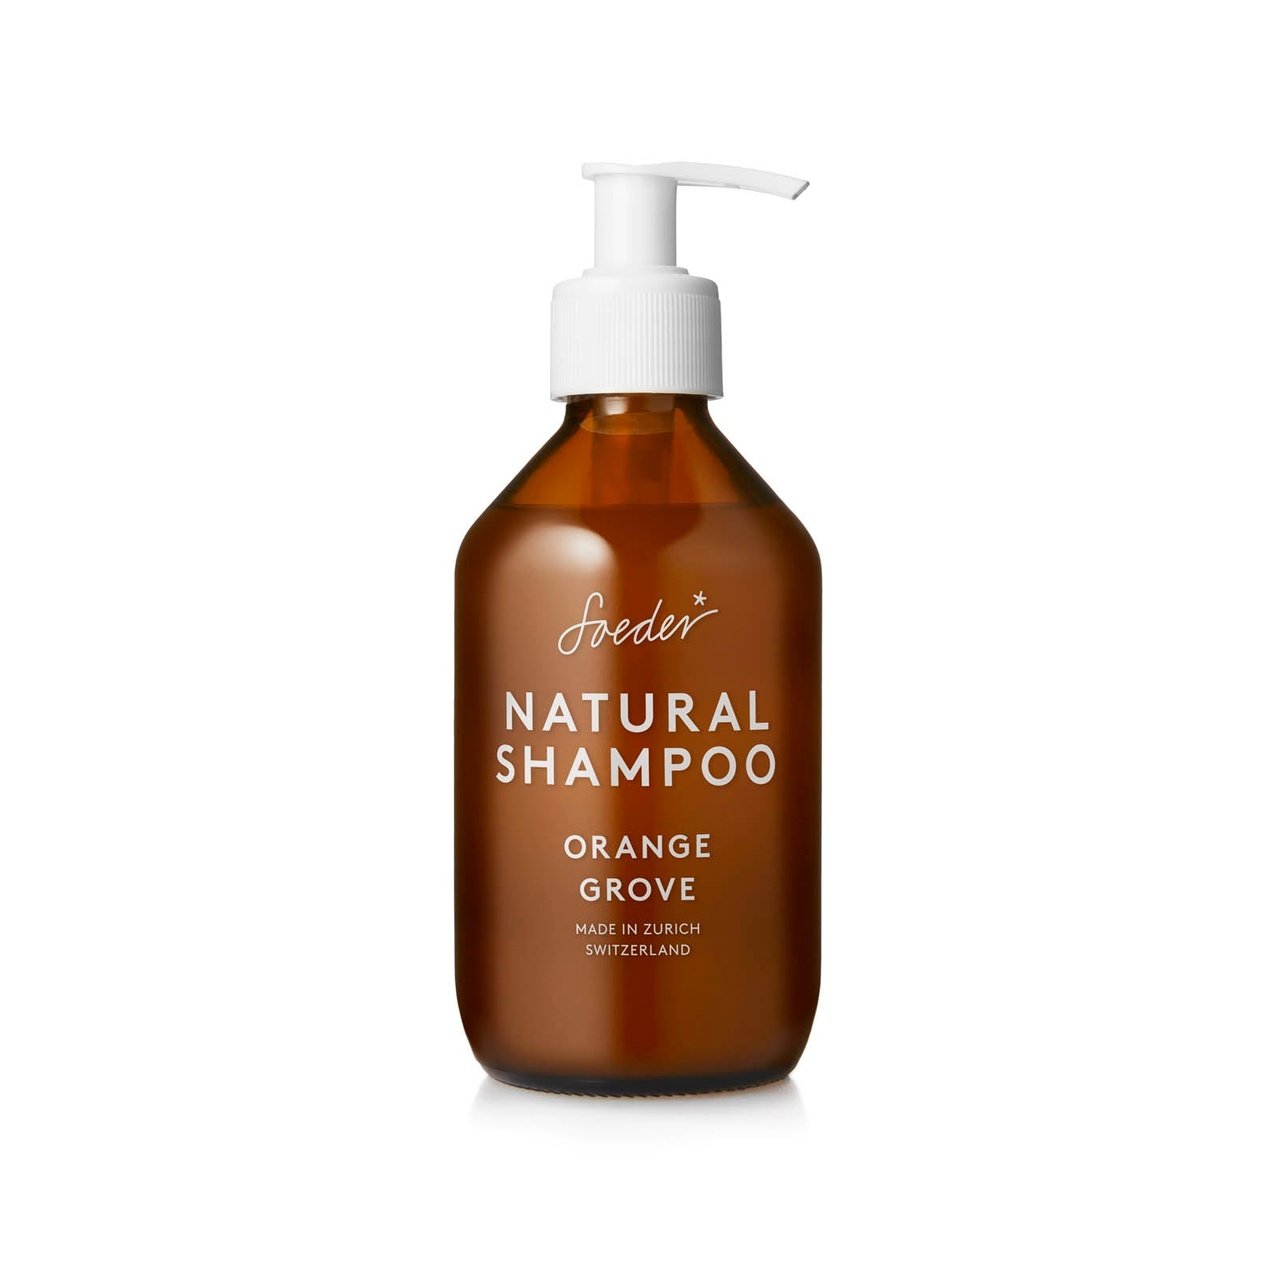 Natural Shampoo Orange Grove